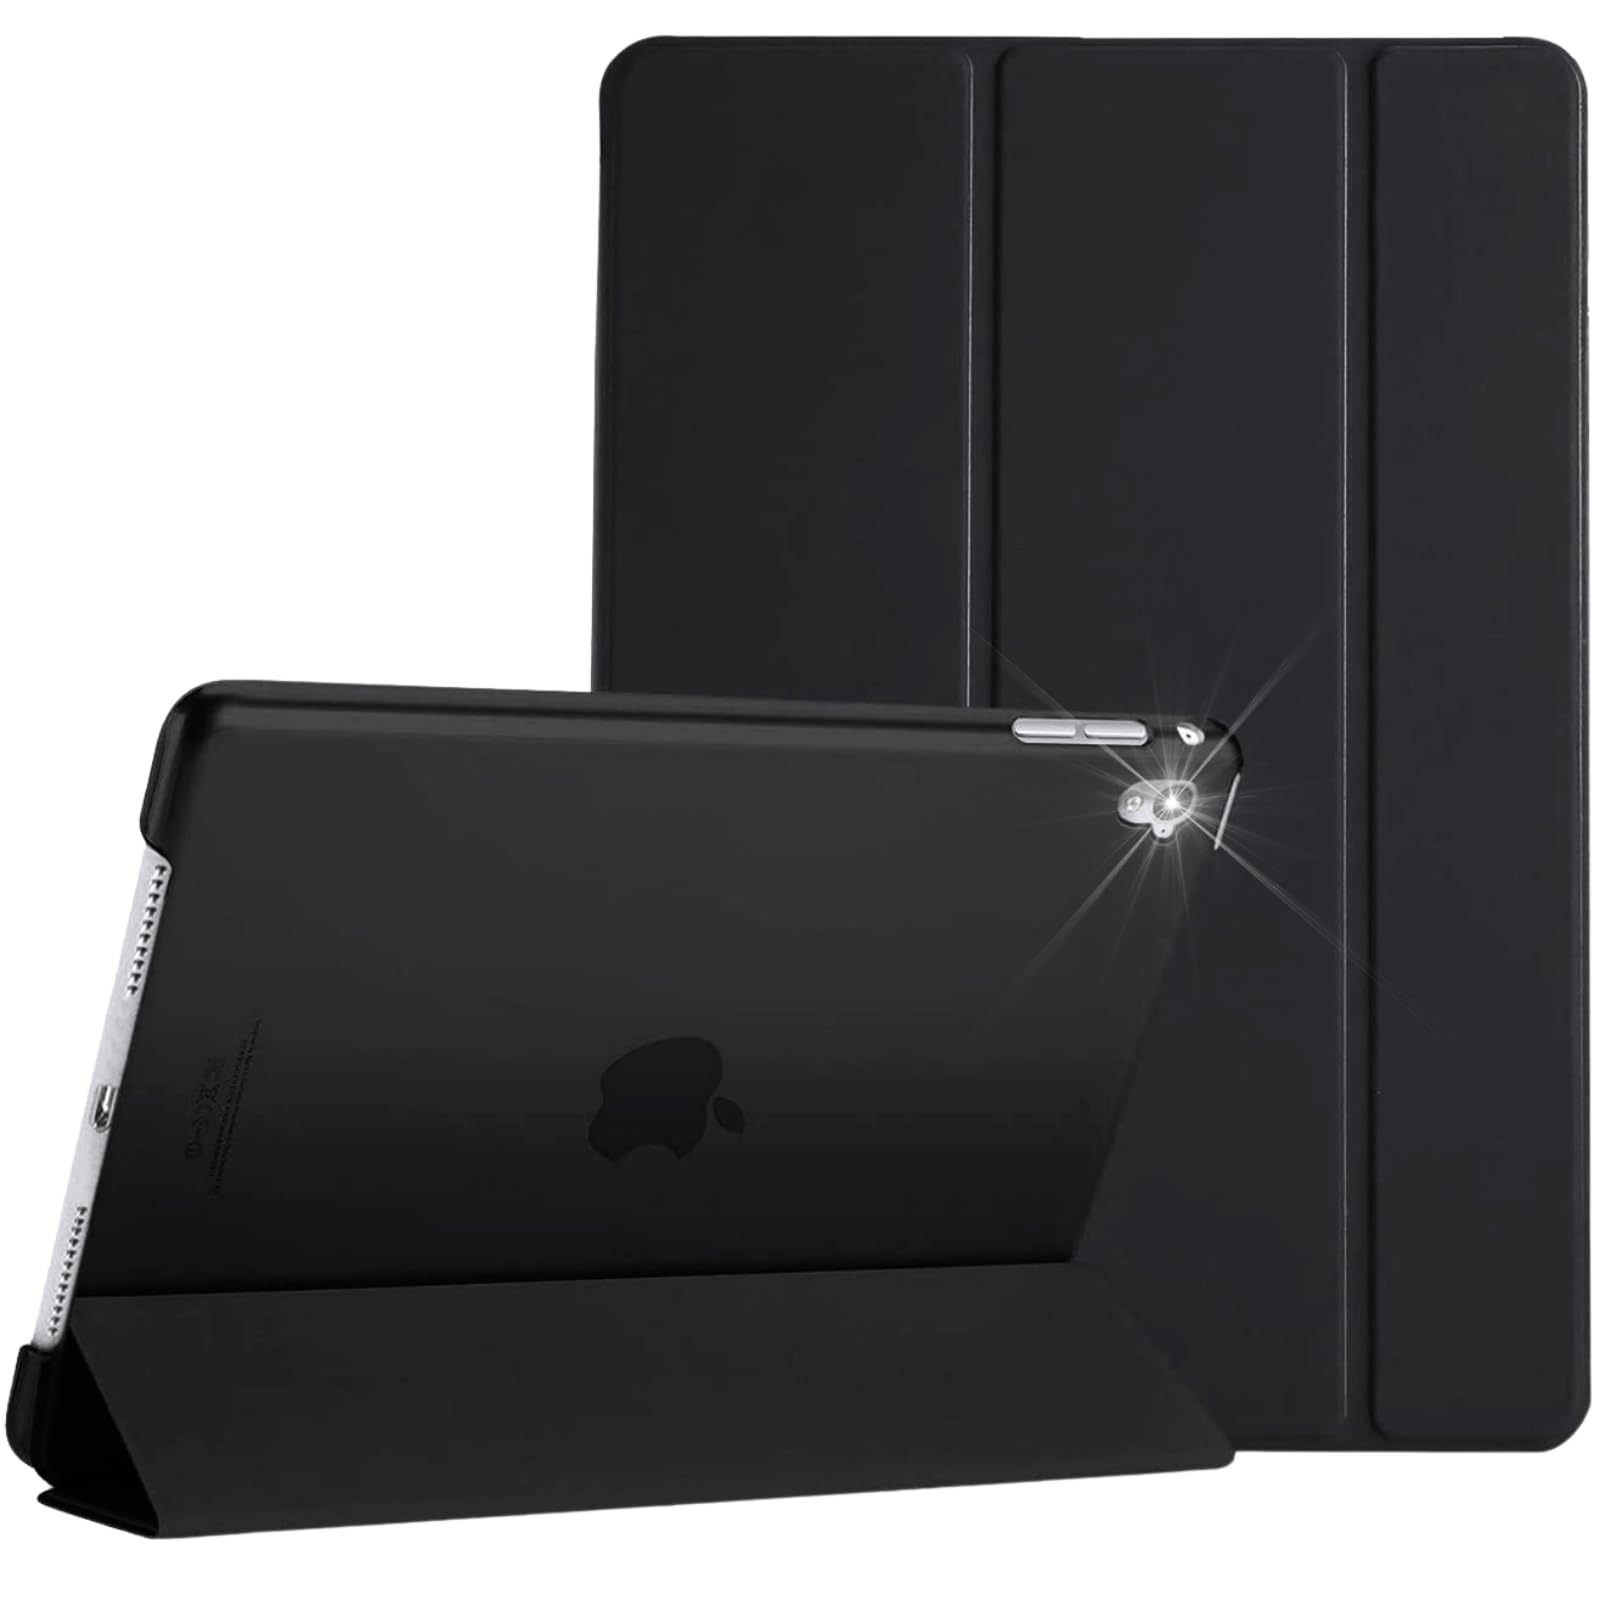 Schutzhülle für Apple iPad Mini 1/2/3 Generation Smart Cover - Auto Wake/Sleep - Mini 1. / 2. / 3. Modell Nr. A1432 / A1454 / A1455 / A1489 / A1490 / A1491 / A1599 / A1600 / A1601 (Schwarz)